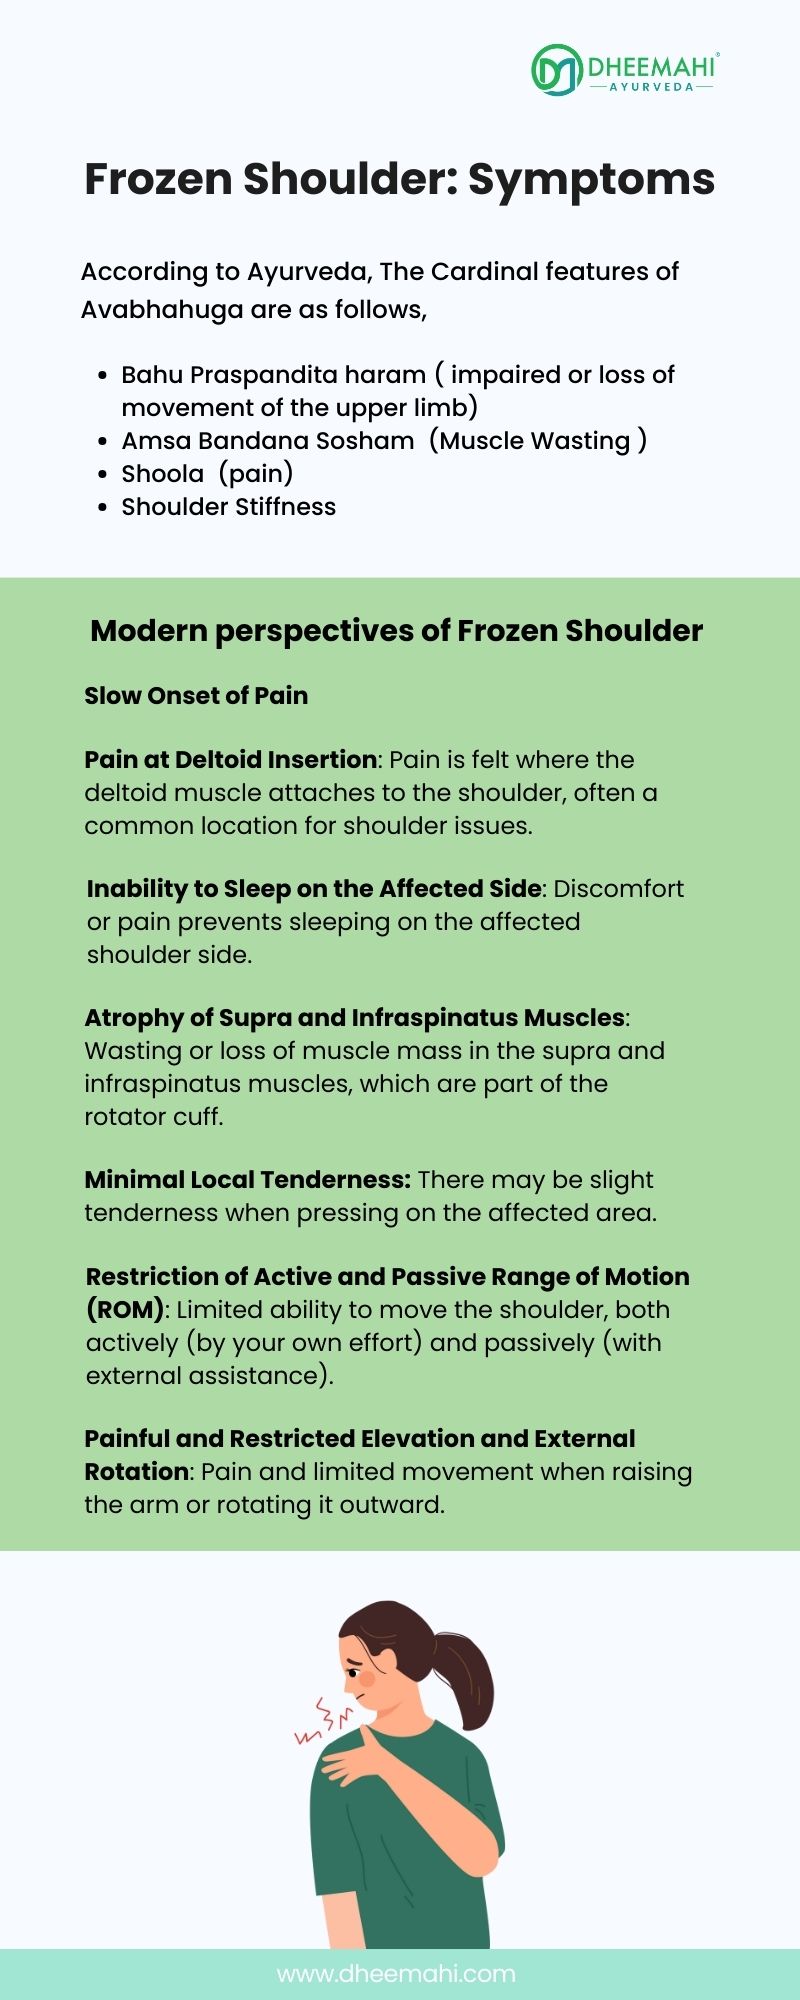 Ayurvedic treatment for frozen shoulder: Symptoms